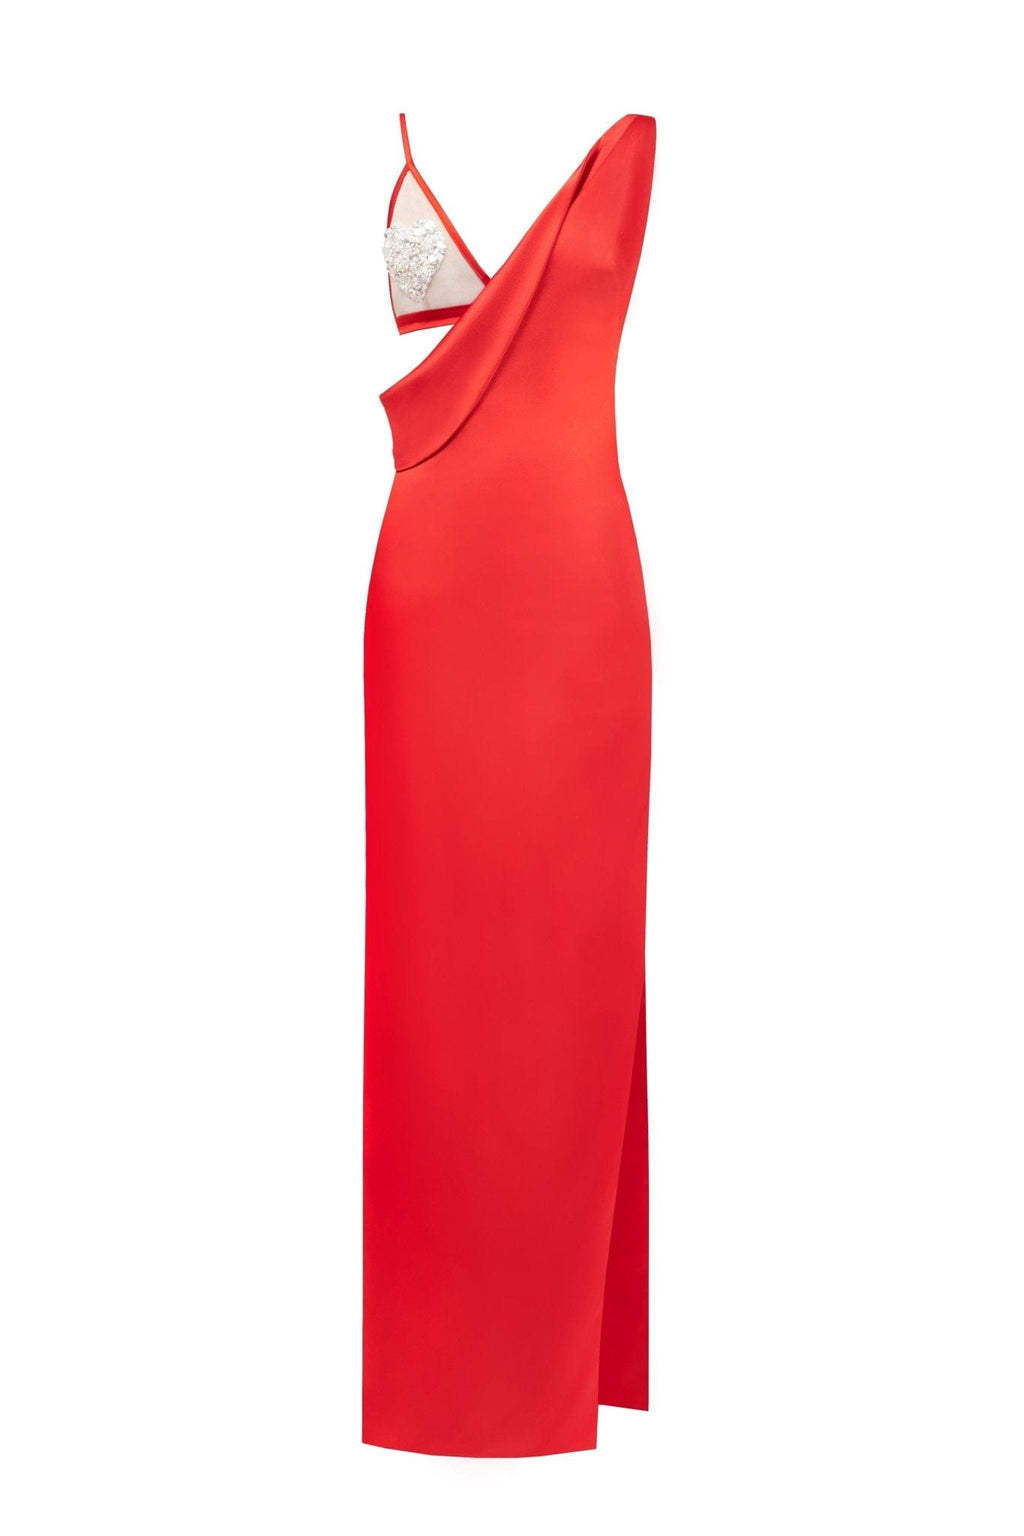 Femme-fatal red maxi dress - Milla